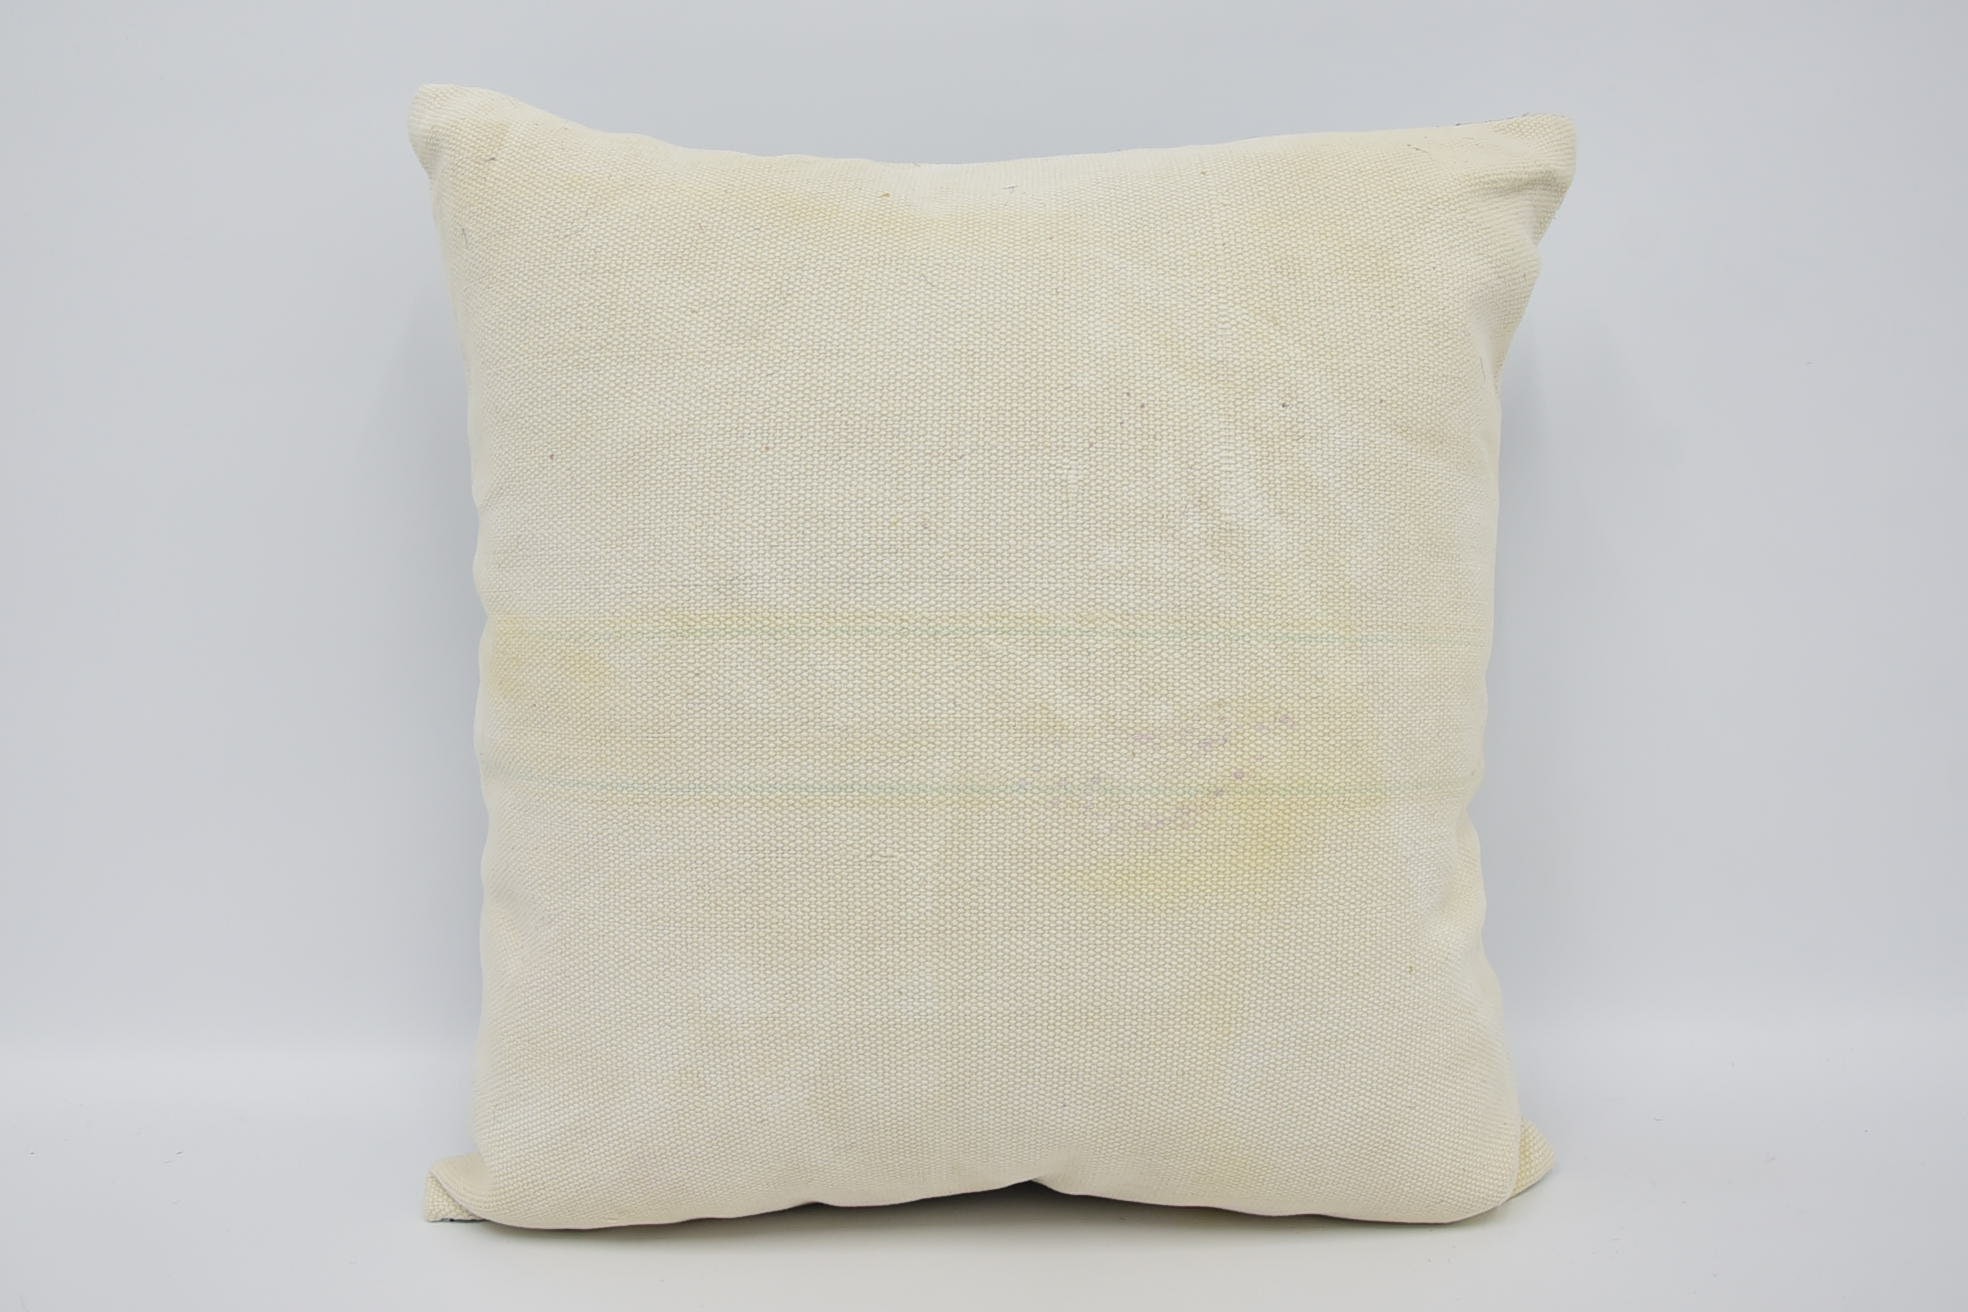 Turkish Pillow, Turkish Bench Cushion, Boho Pillow Sham Cover, 18"x18" Beige Pillow, Handmade Kilim Cushion, Shabby Chic Cushion Cover